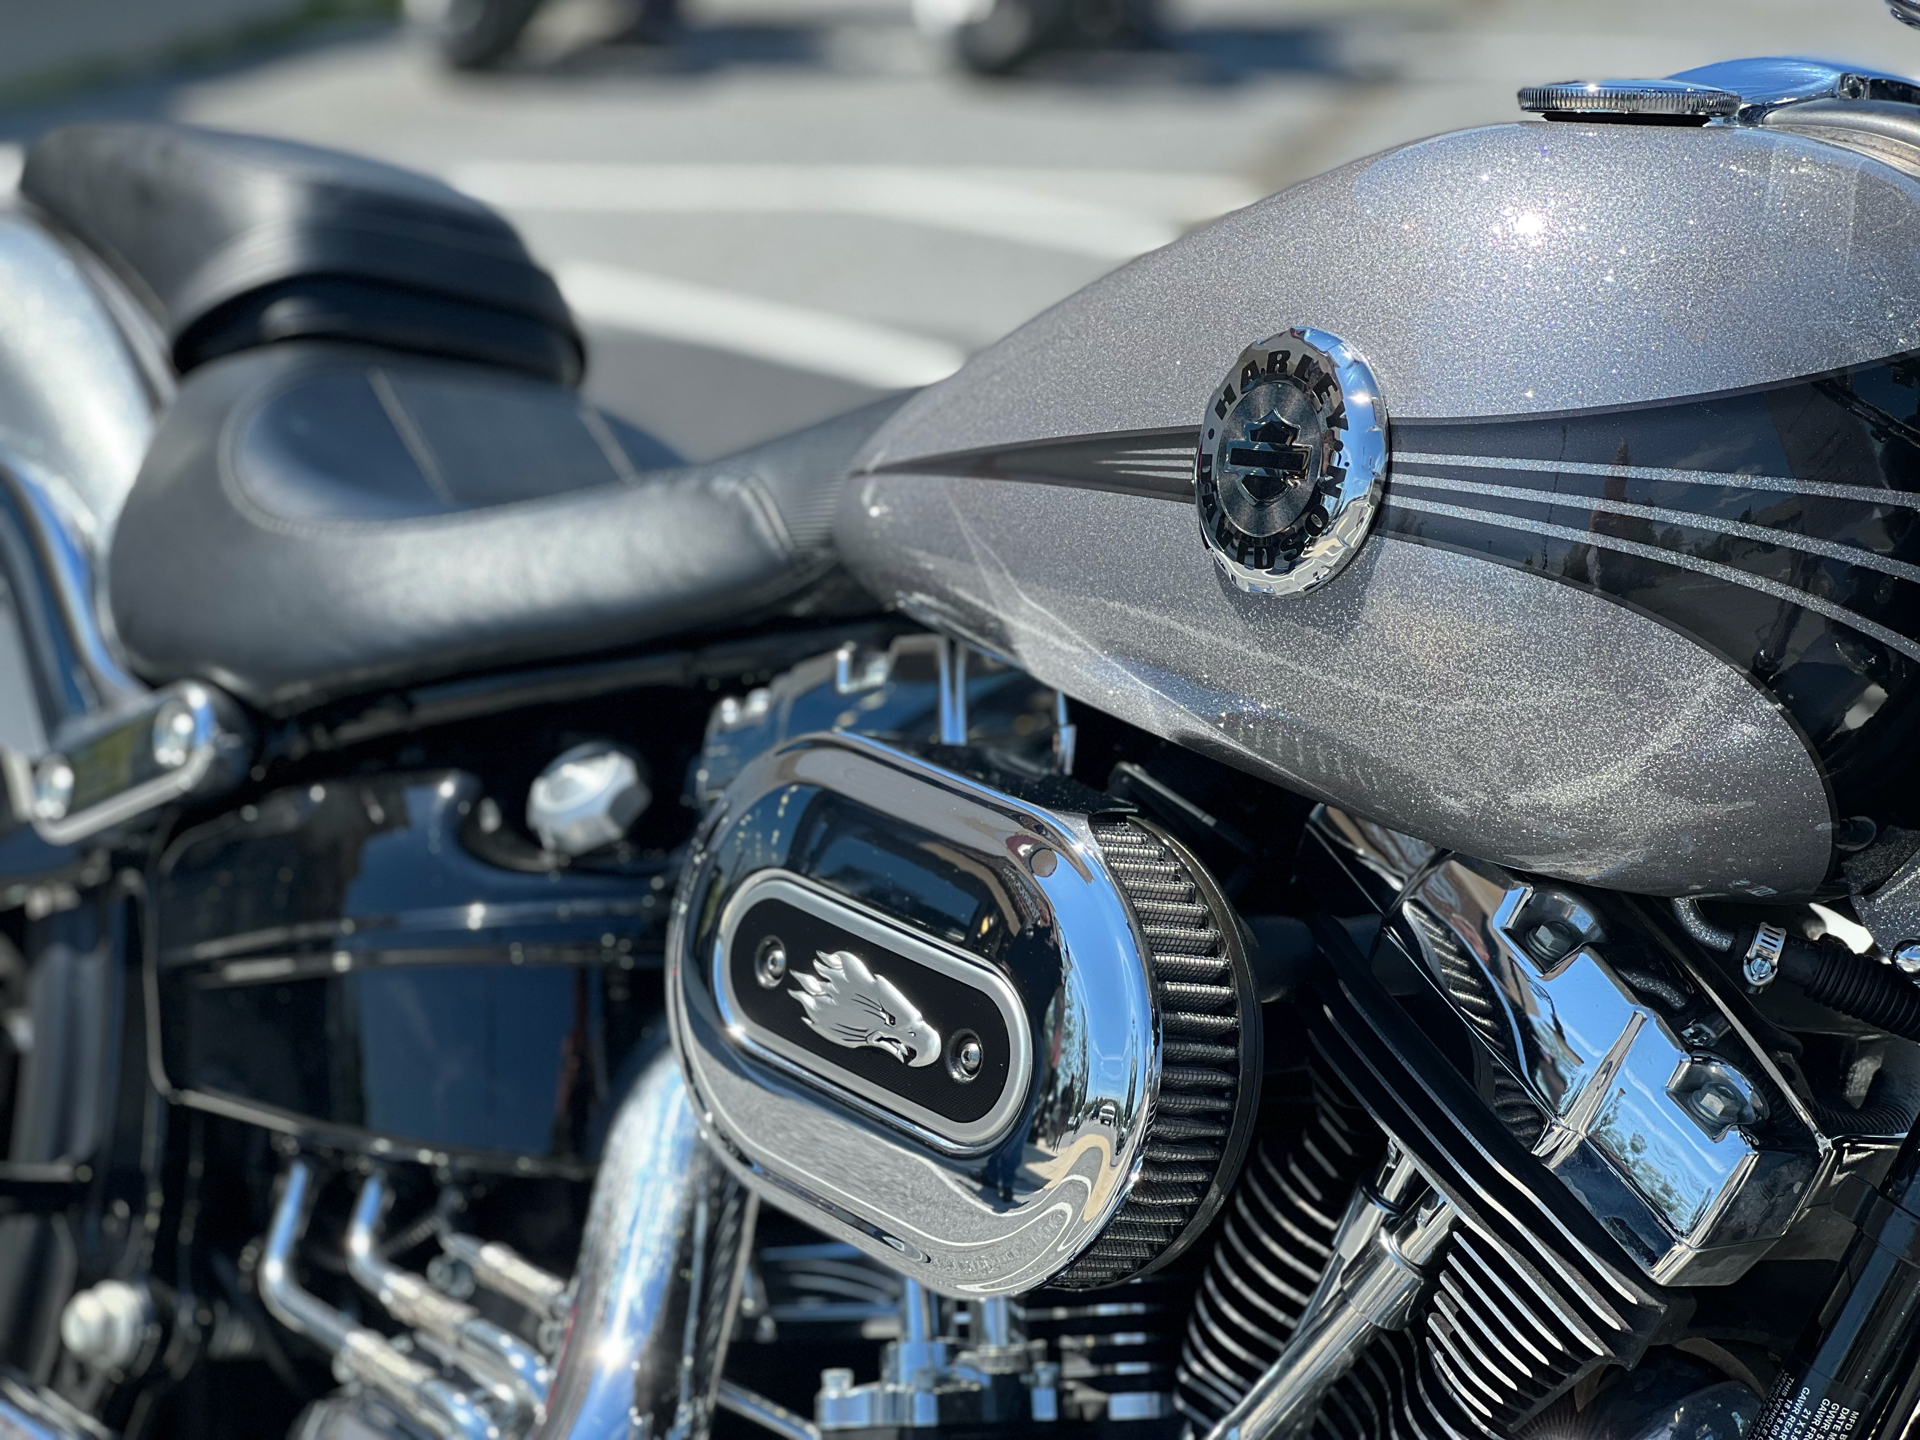 2015 Harley-Davidson Breakout® in Frederick, Maryland - Photo 4